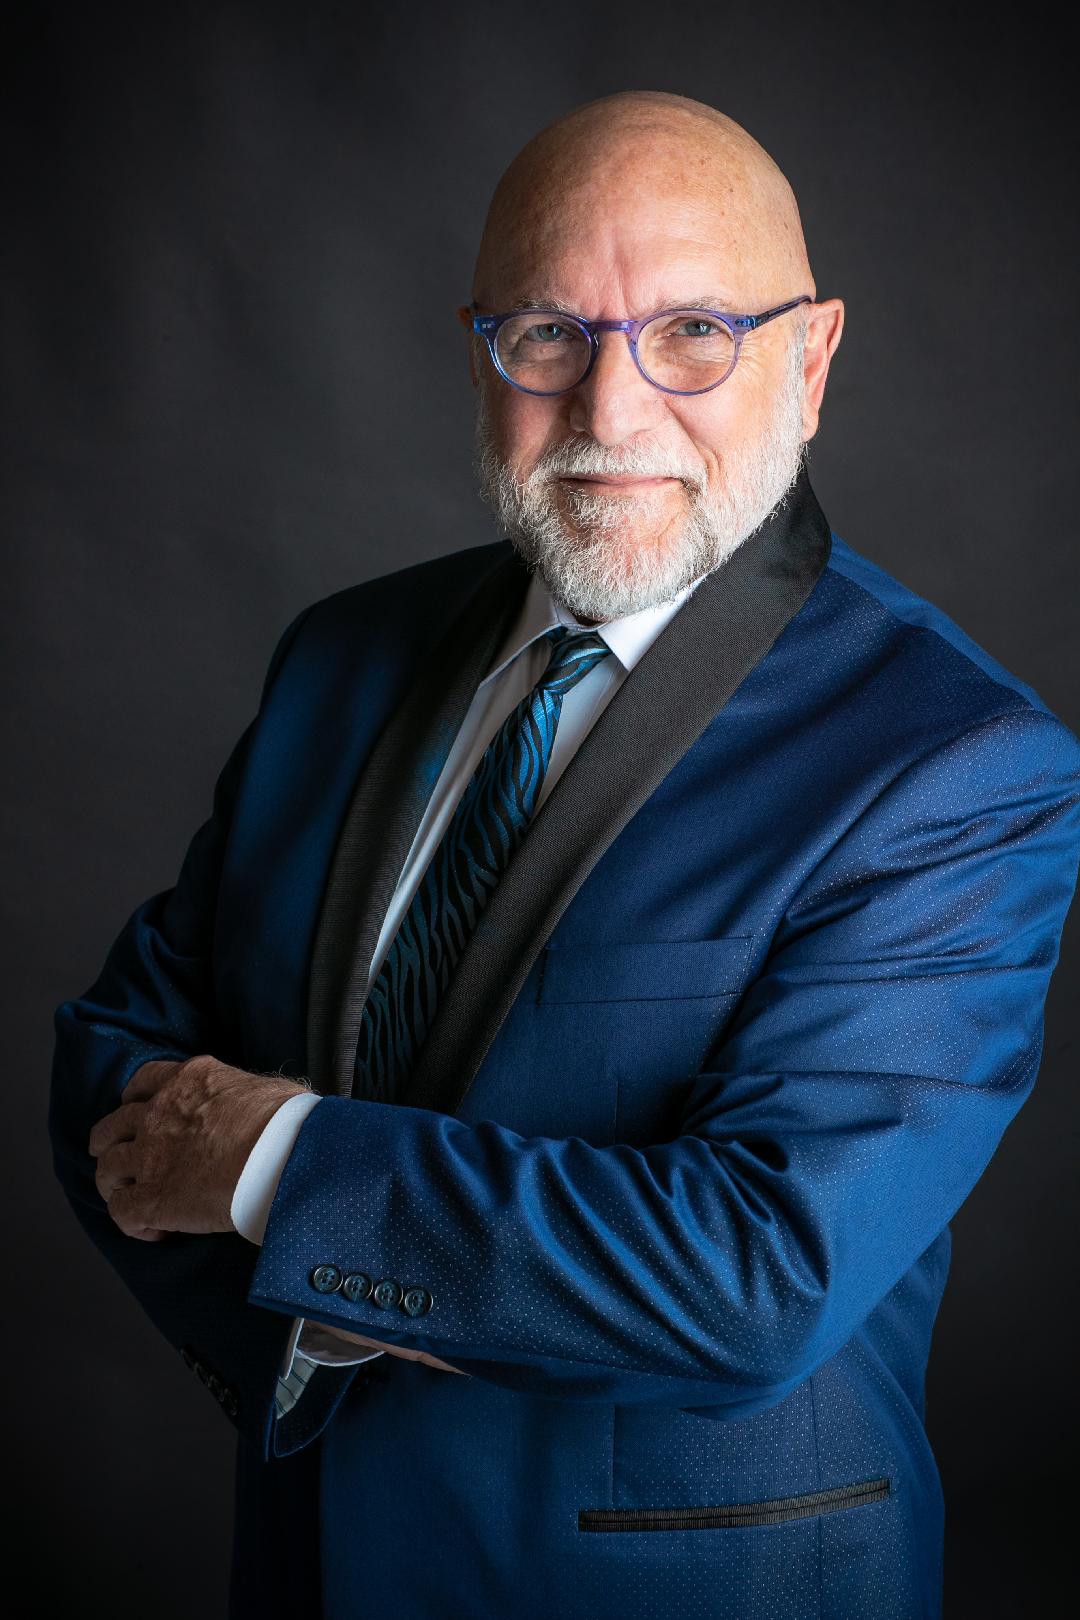 Tim Seelig, conductor, speaker, author and educator